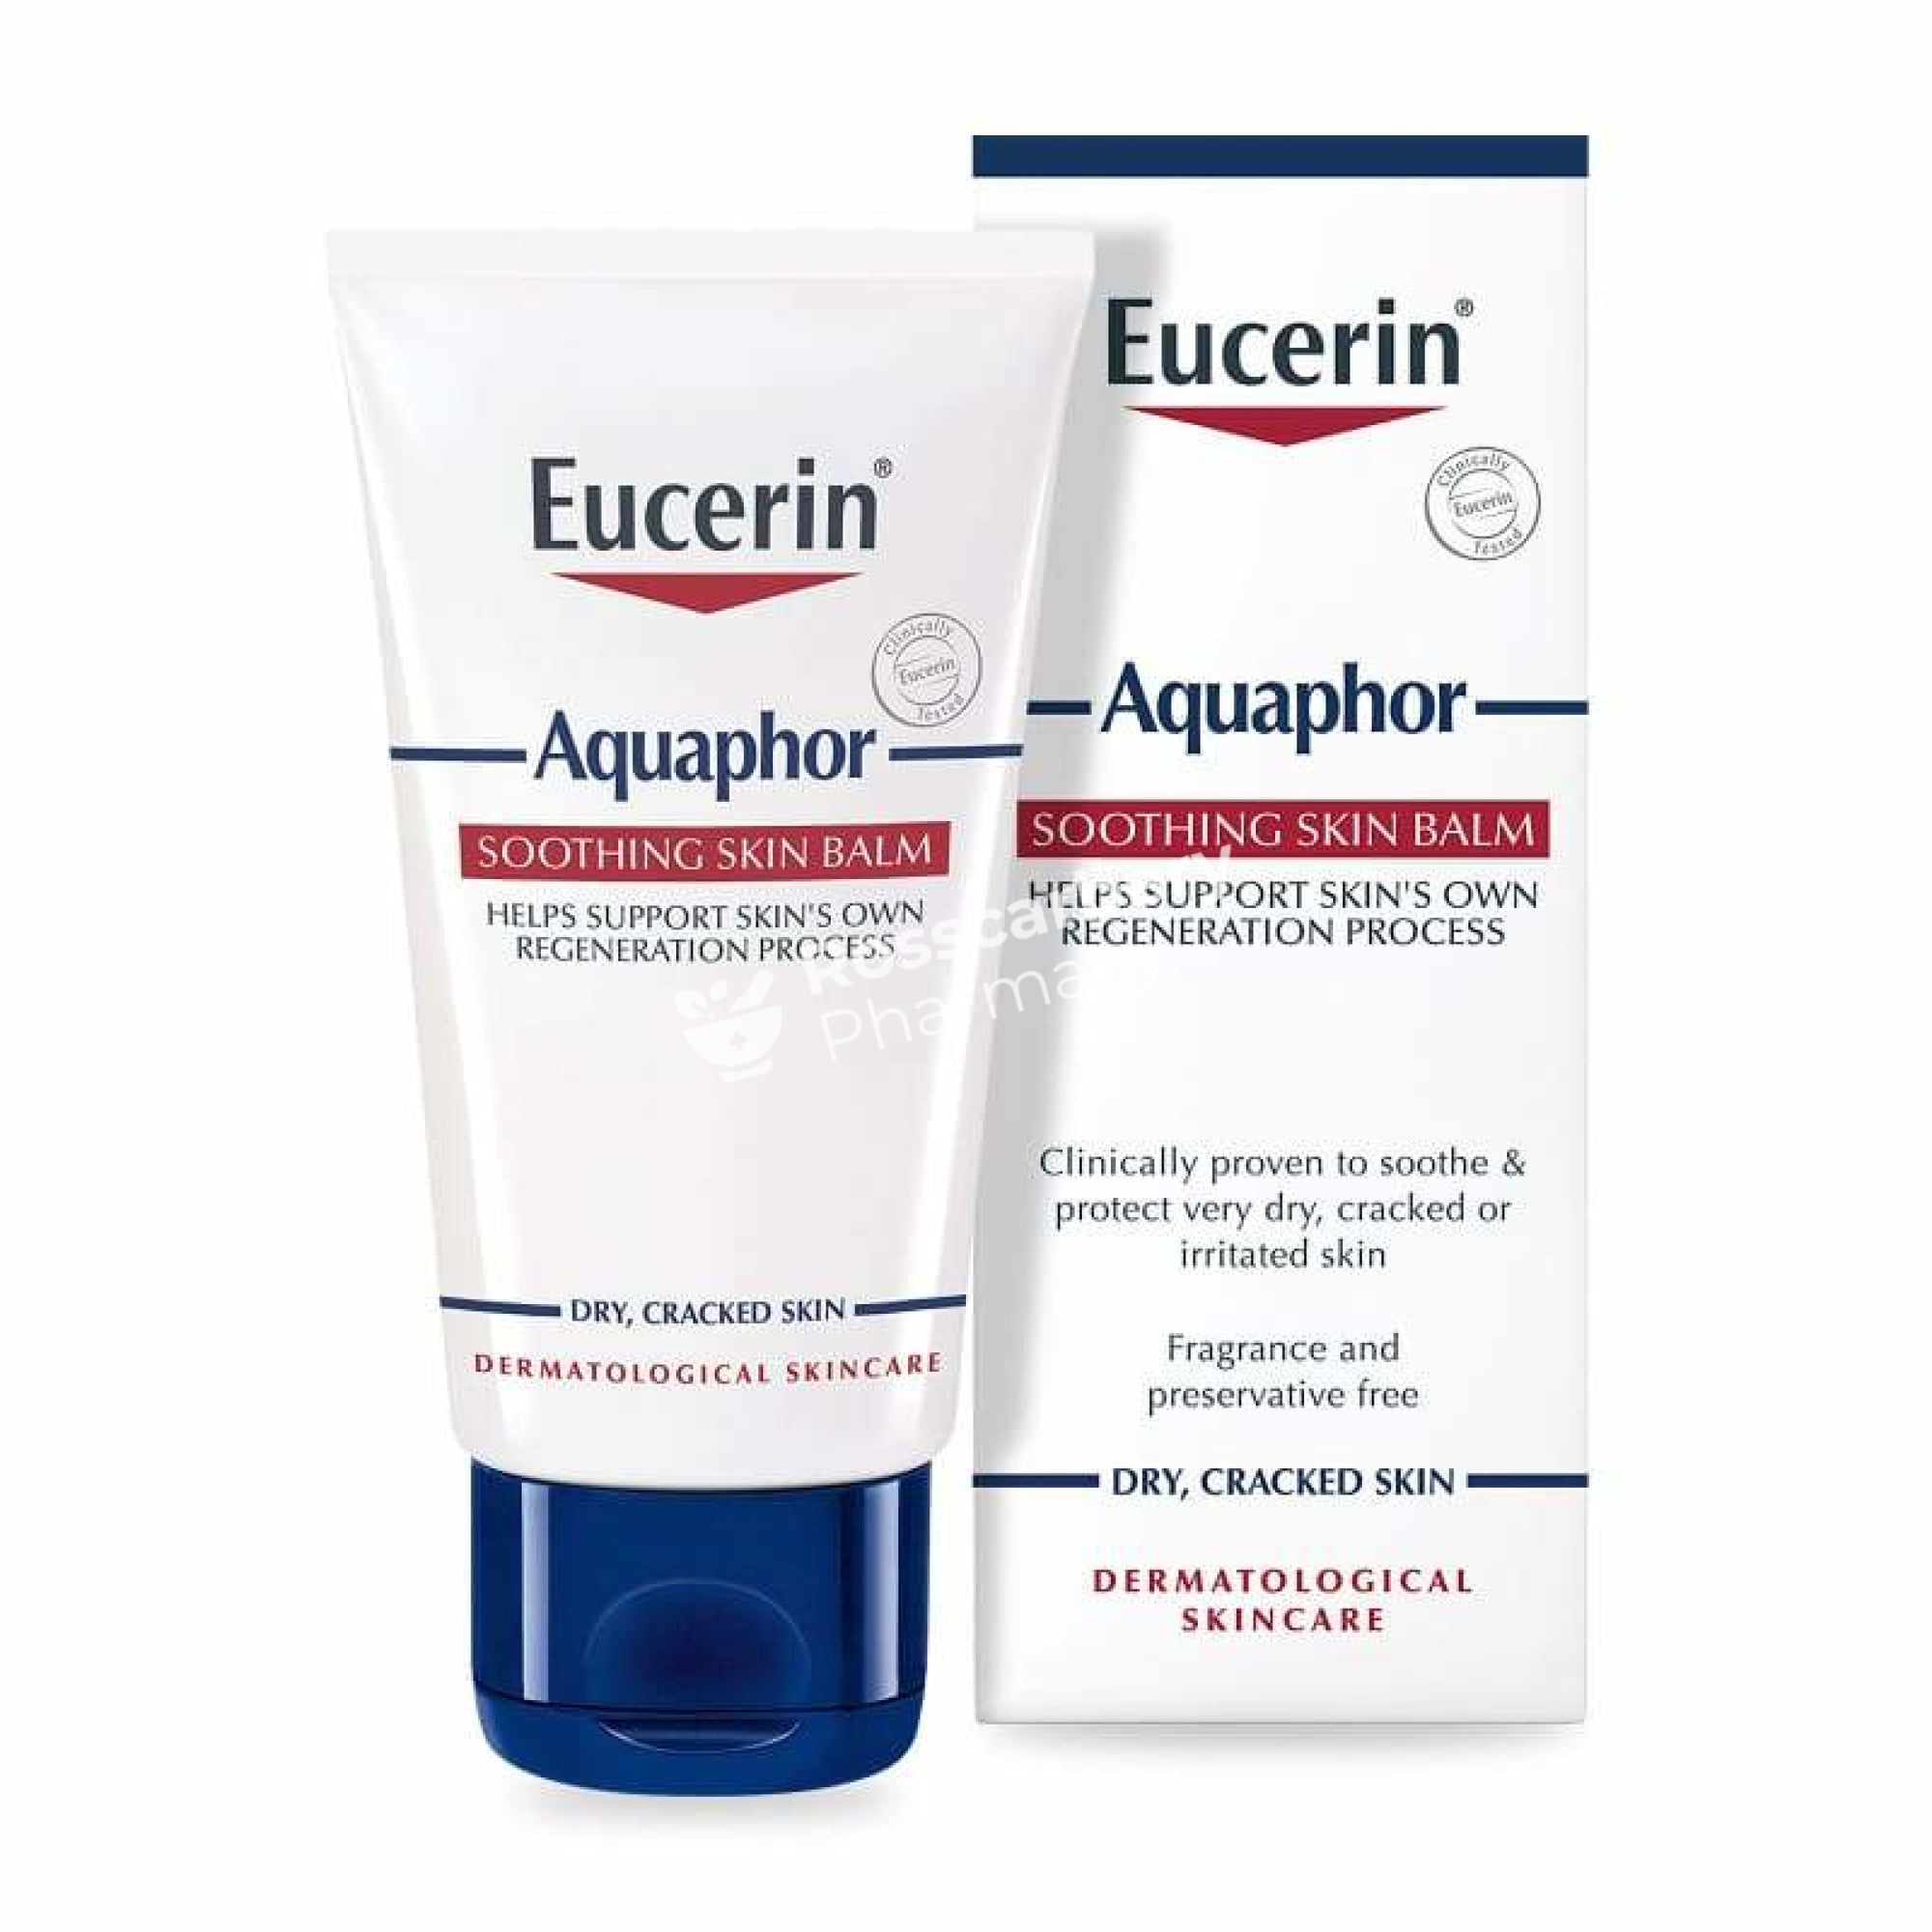 Eucerin Aquaphor Soothing Skin Balm Body Moisturiser